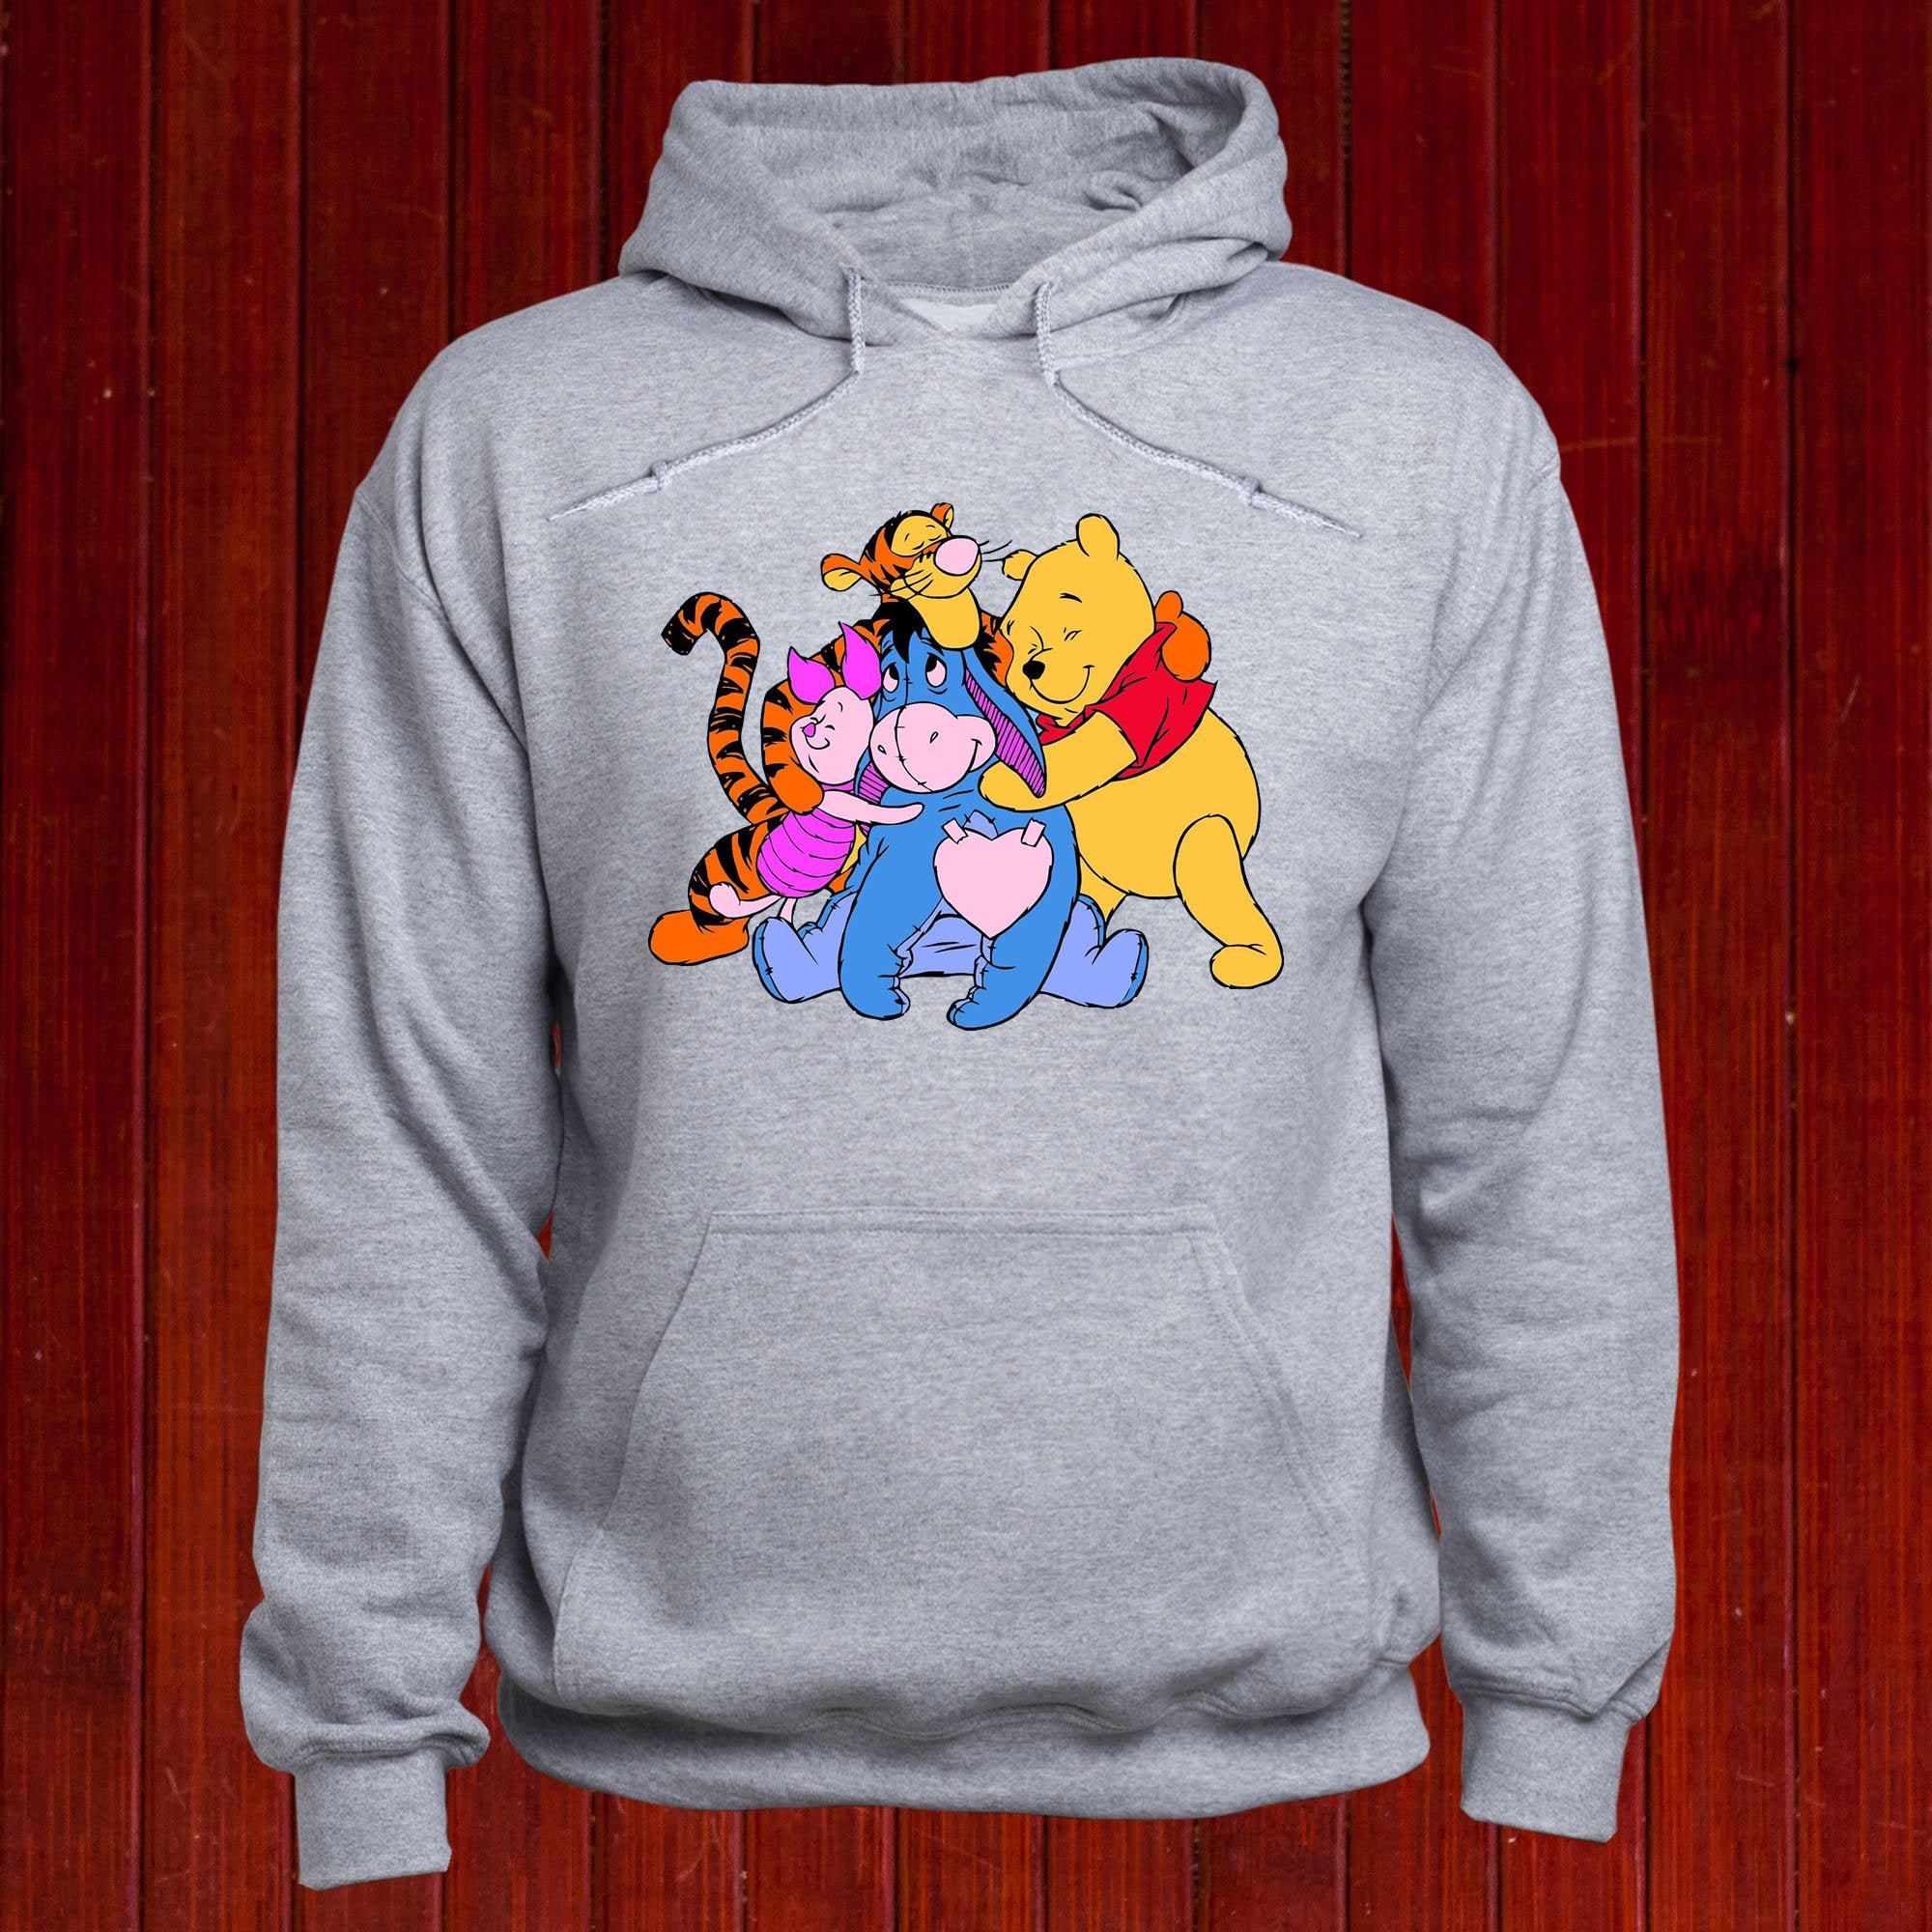 Discover Disney Winnie The Pooh Friends Hoodie, Winnie The Pooh Characters Jumper, Disney Winnie The Pooh Squad Goals Jumper, Friendship hoody (T172)